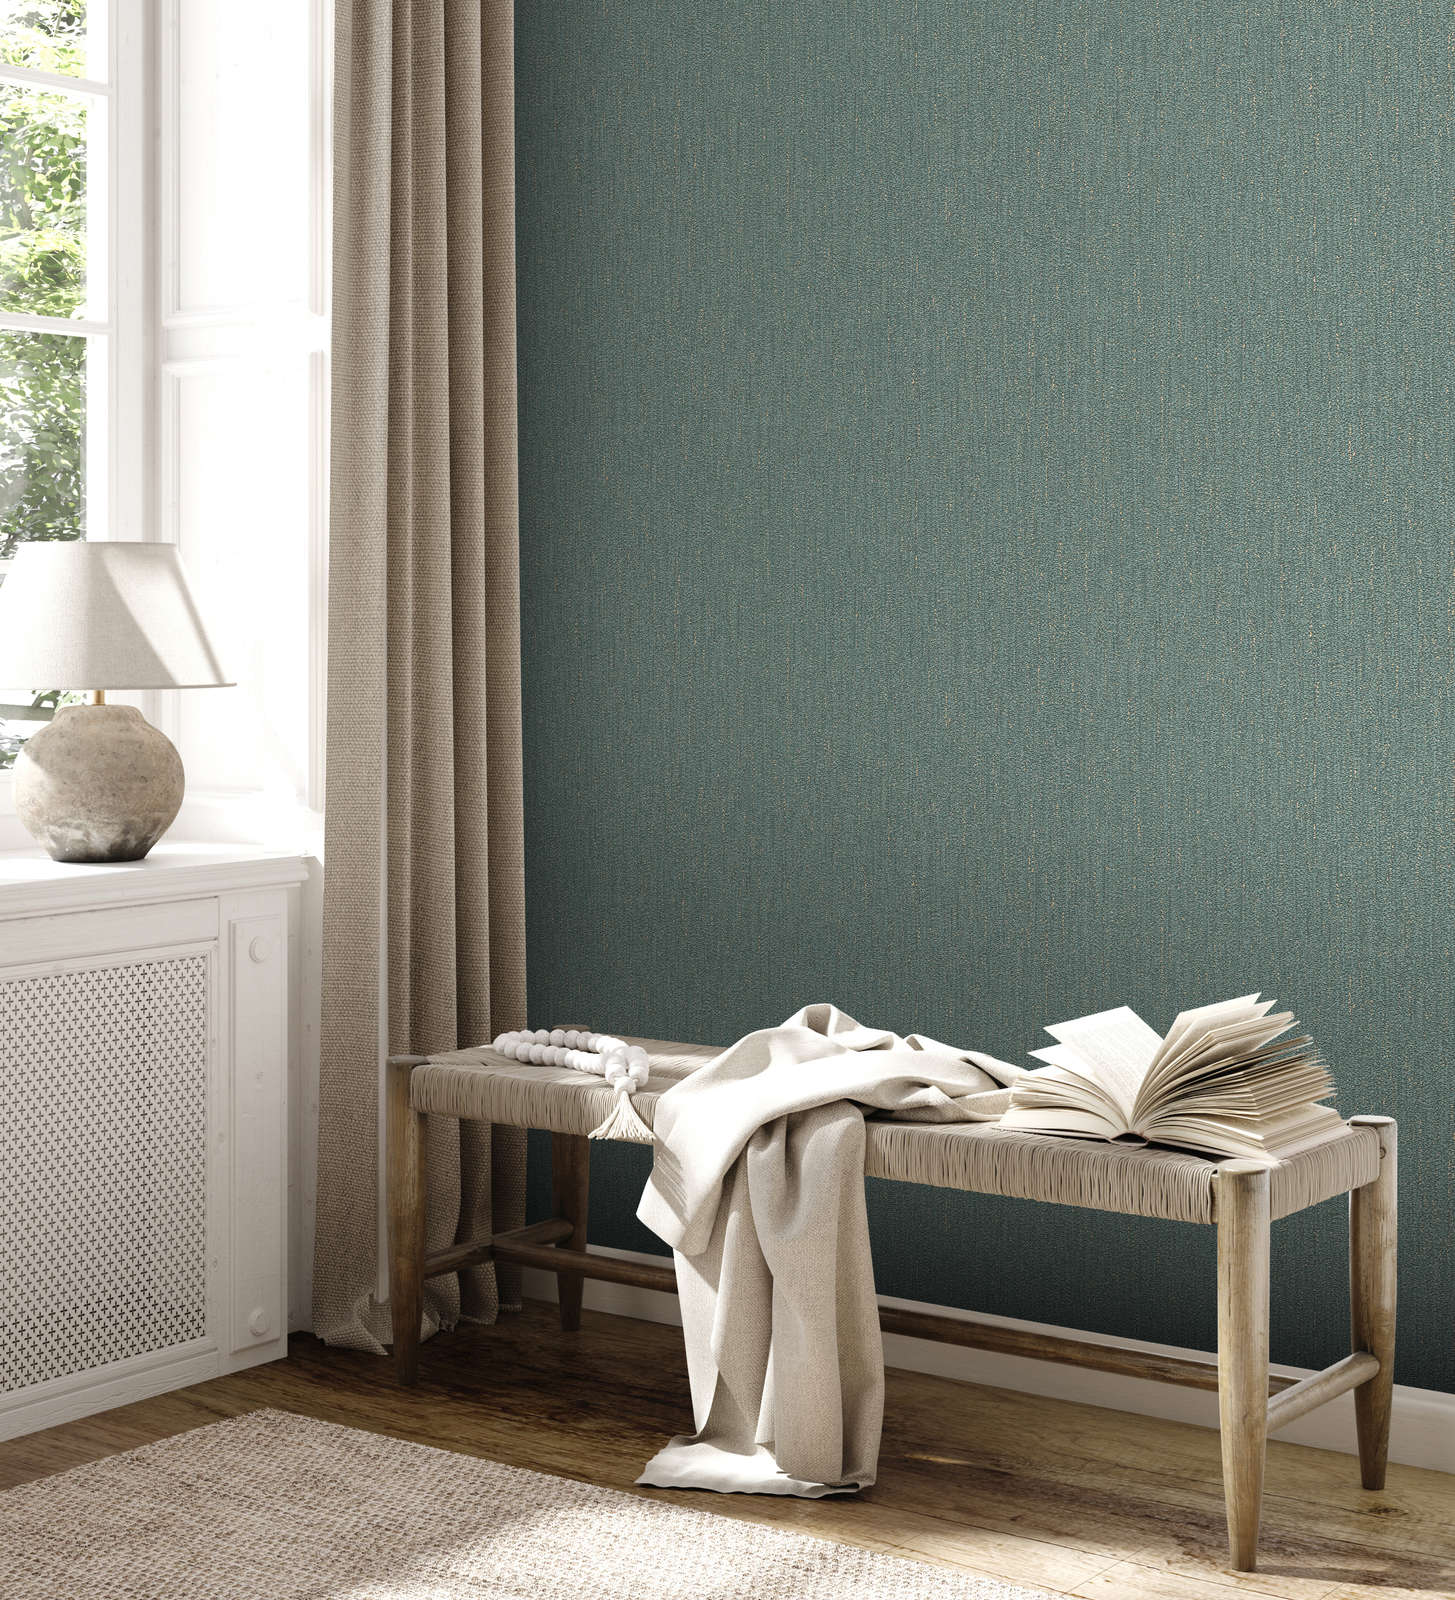             textured wallpaper fabric look light glossy - green, gold
        